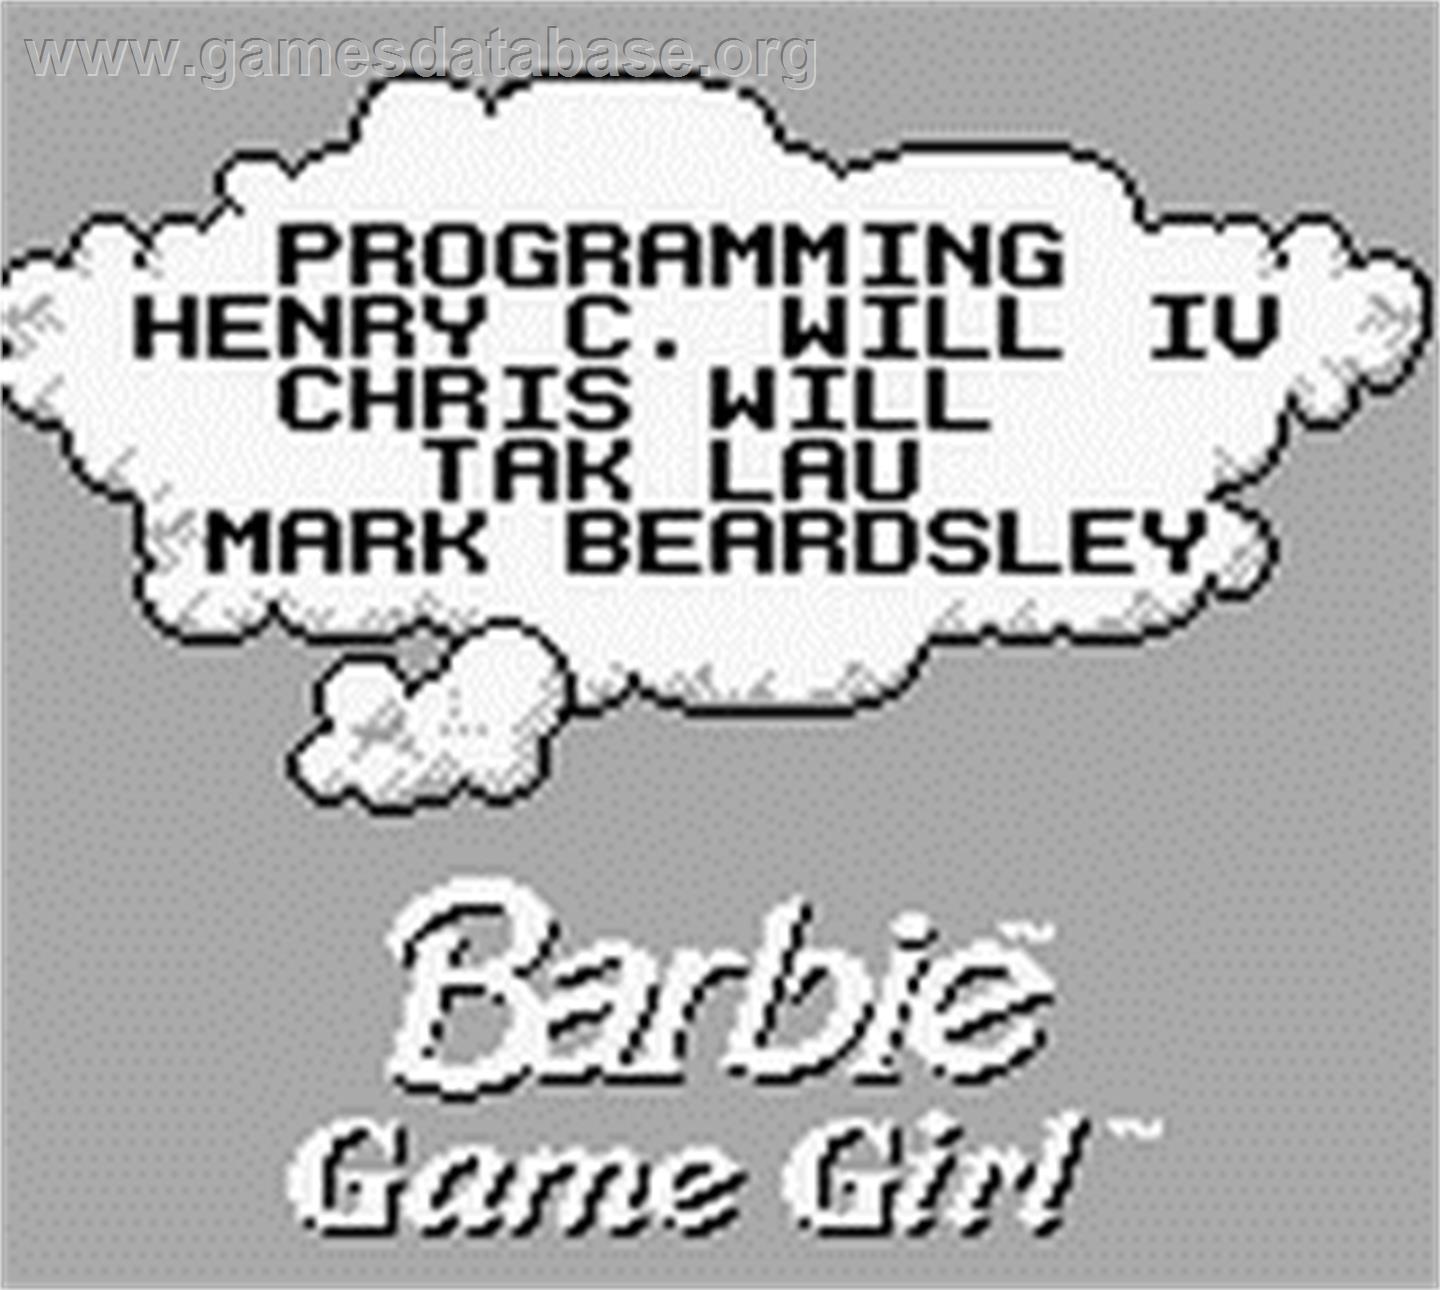 barbie game girl game boy